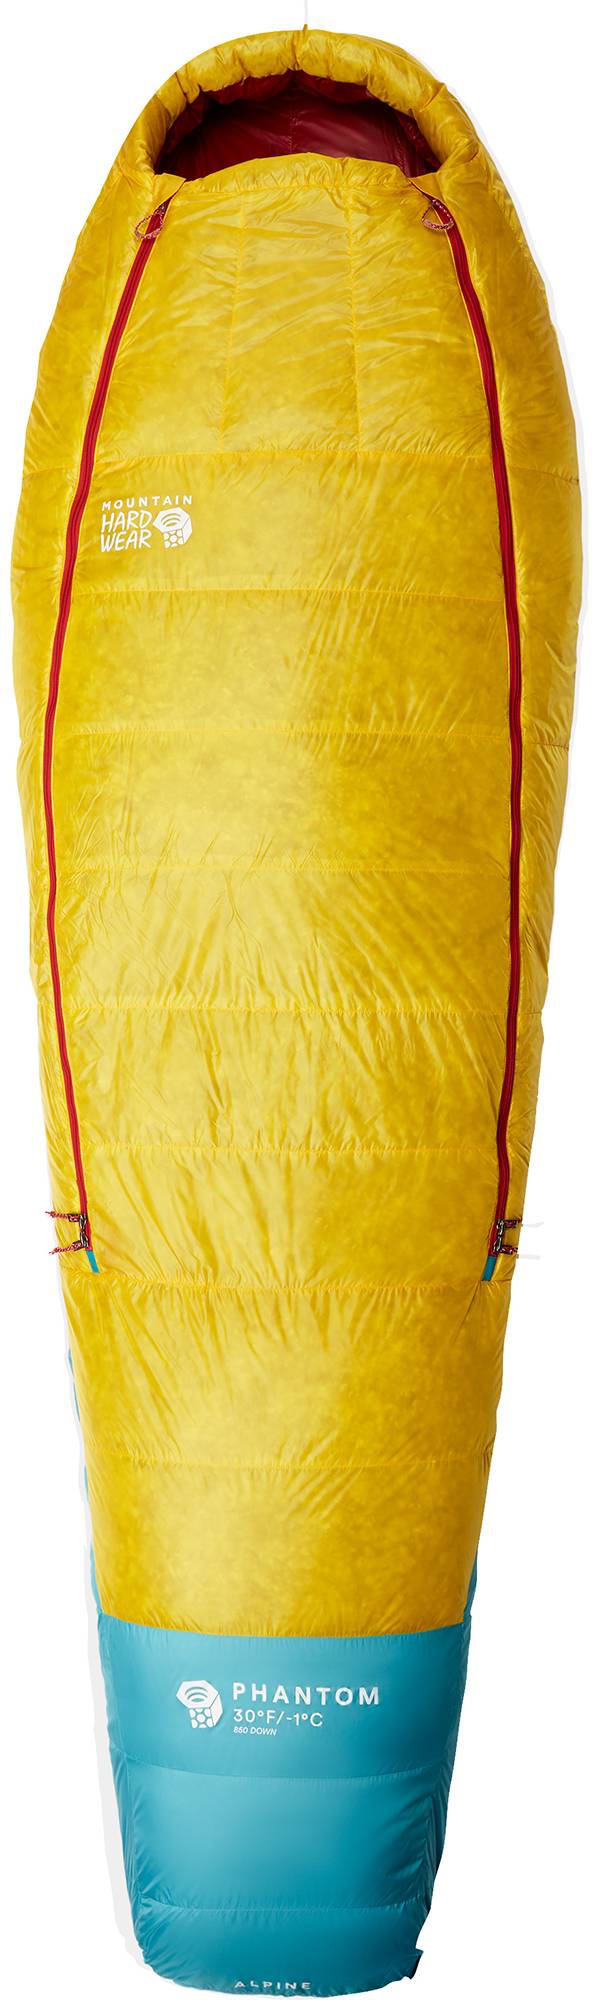 Mountain Hardwear Phantom Alpine 30°F Sleeping Bag product image